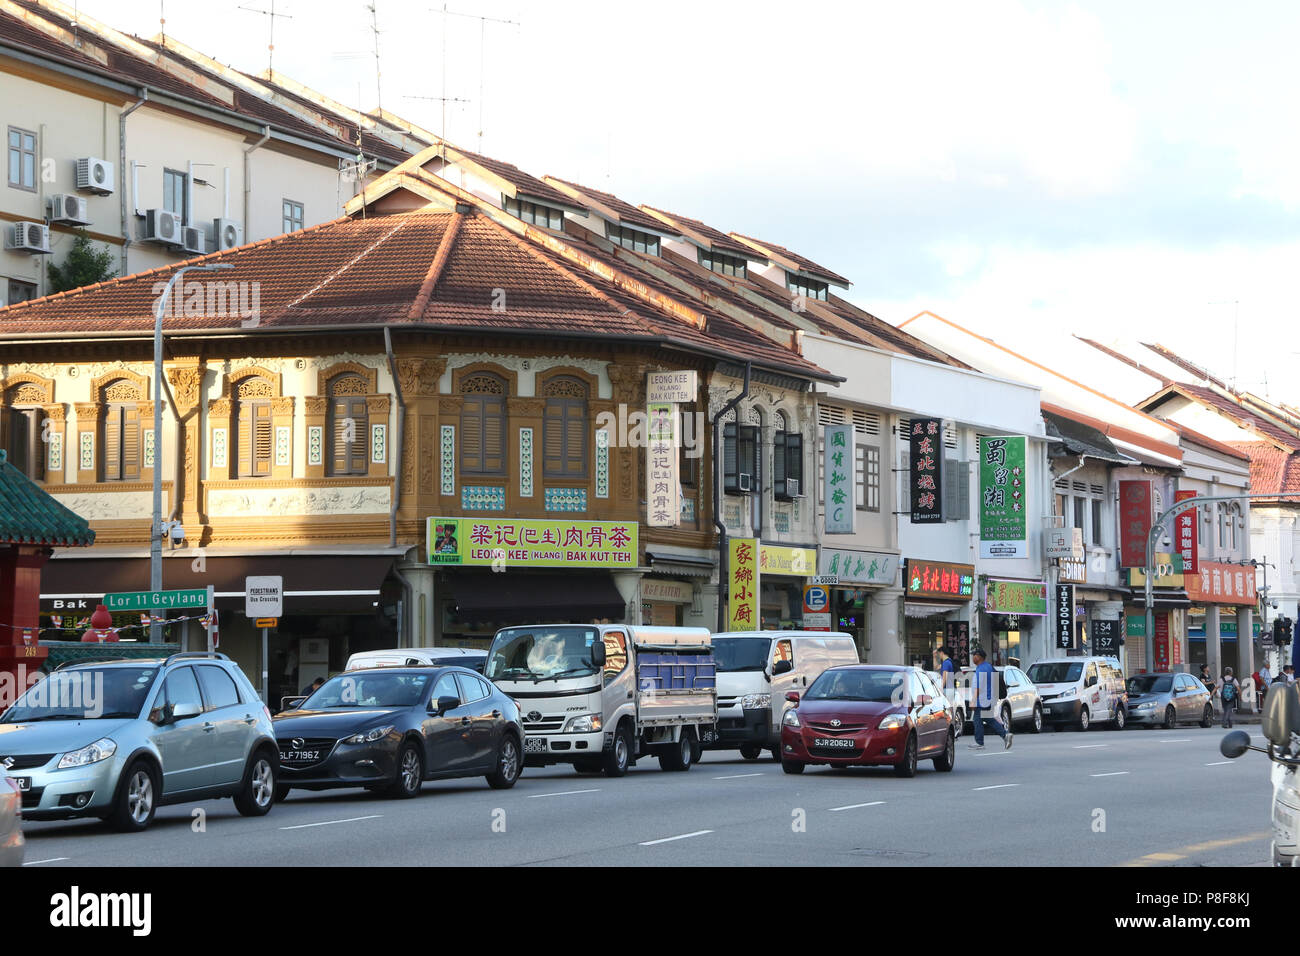 Bâtiments sur Geylang Road, Geylang, Singapour. Banque D'Images